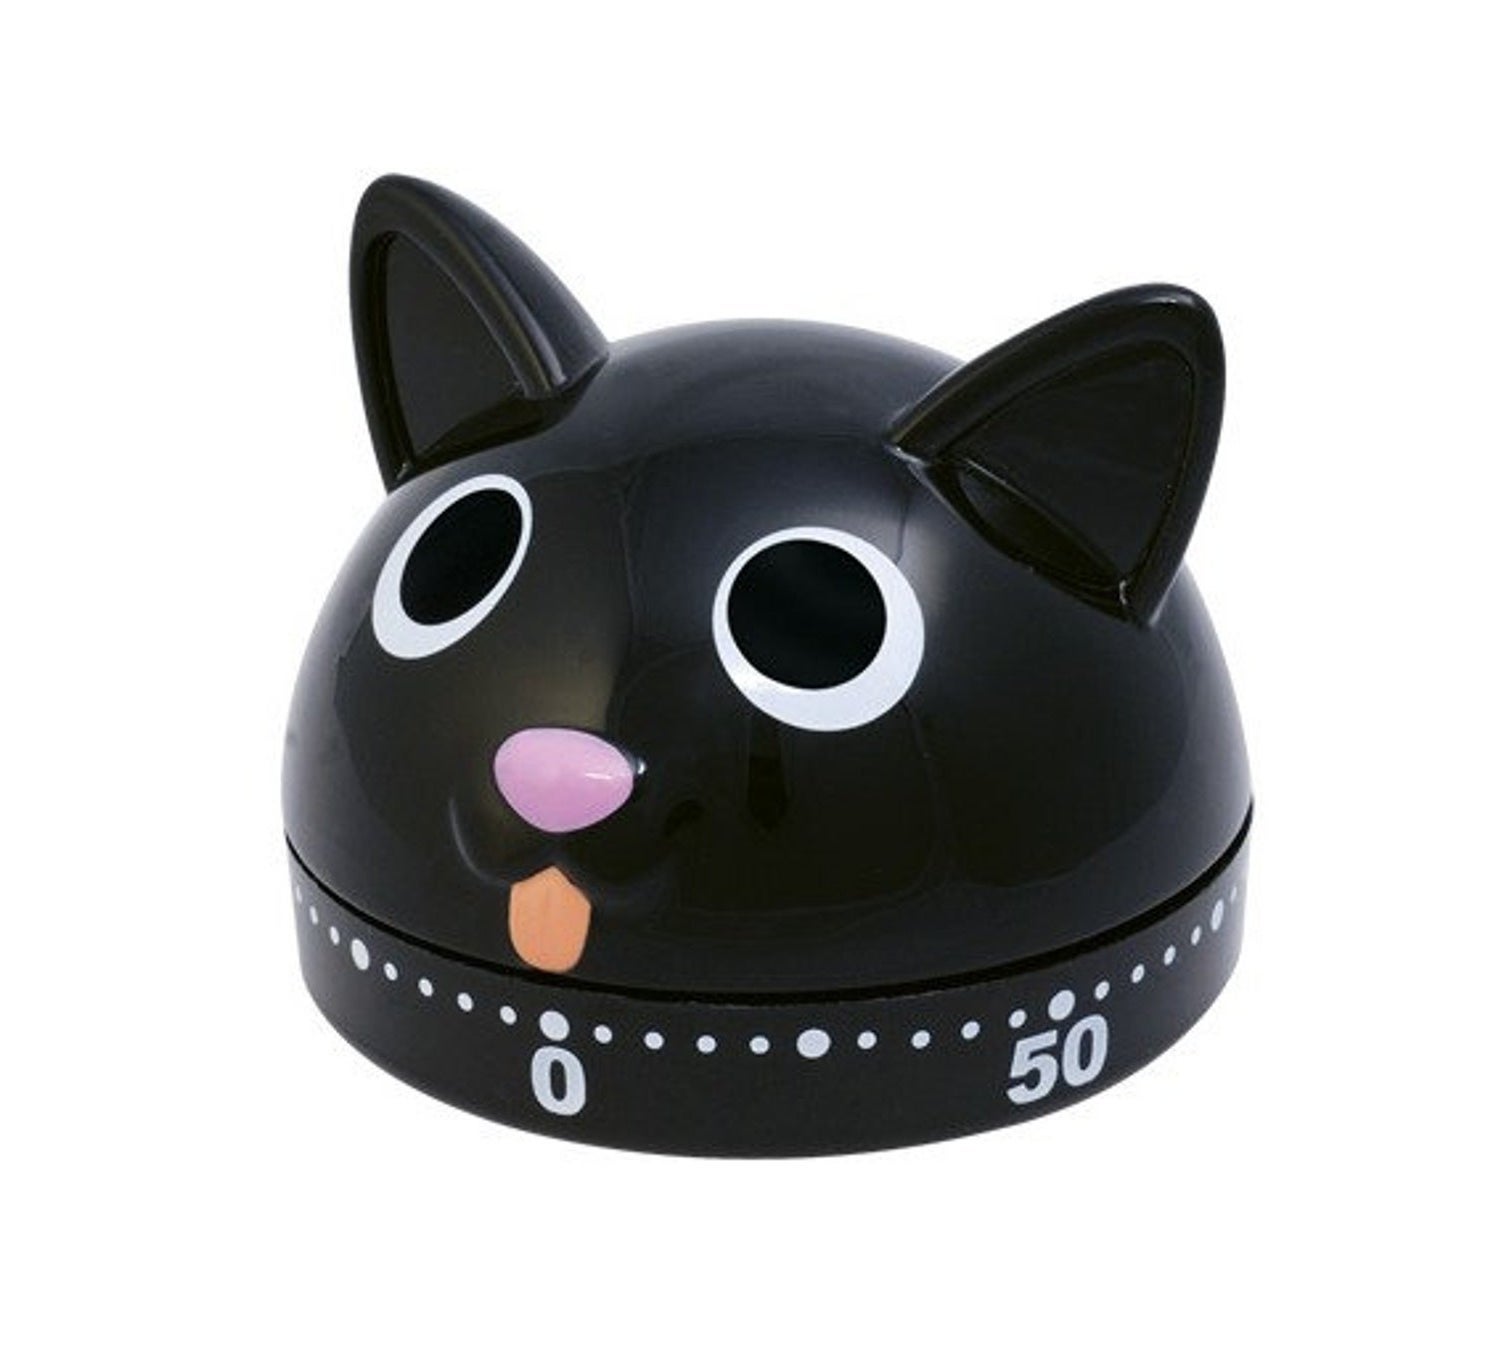 a black cat shaped timer